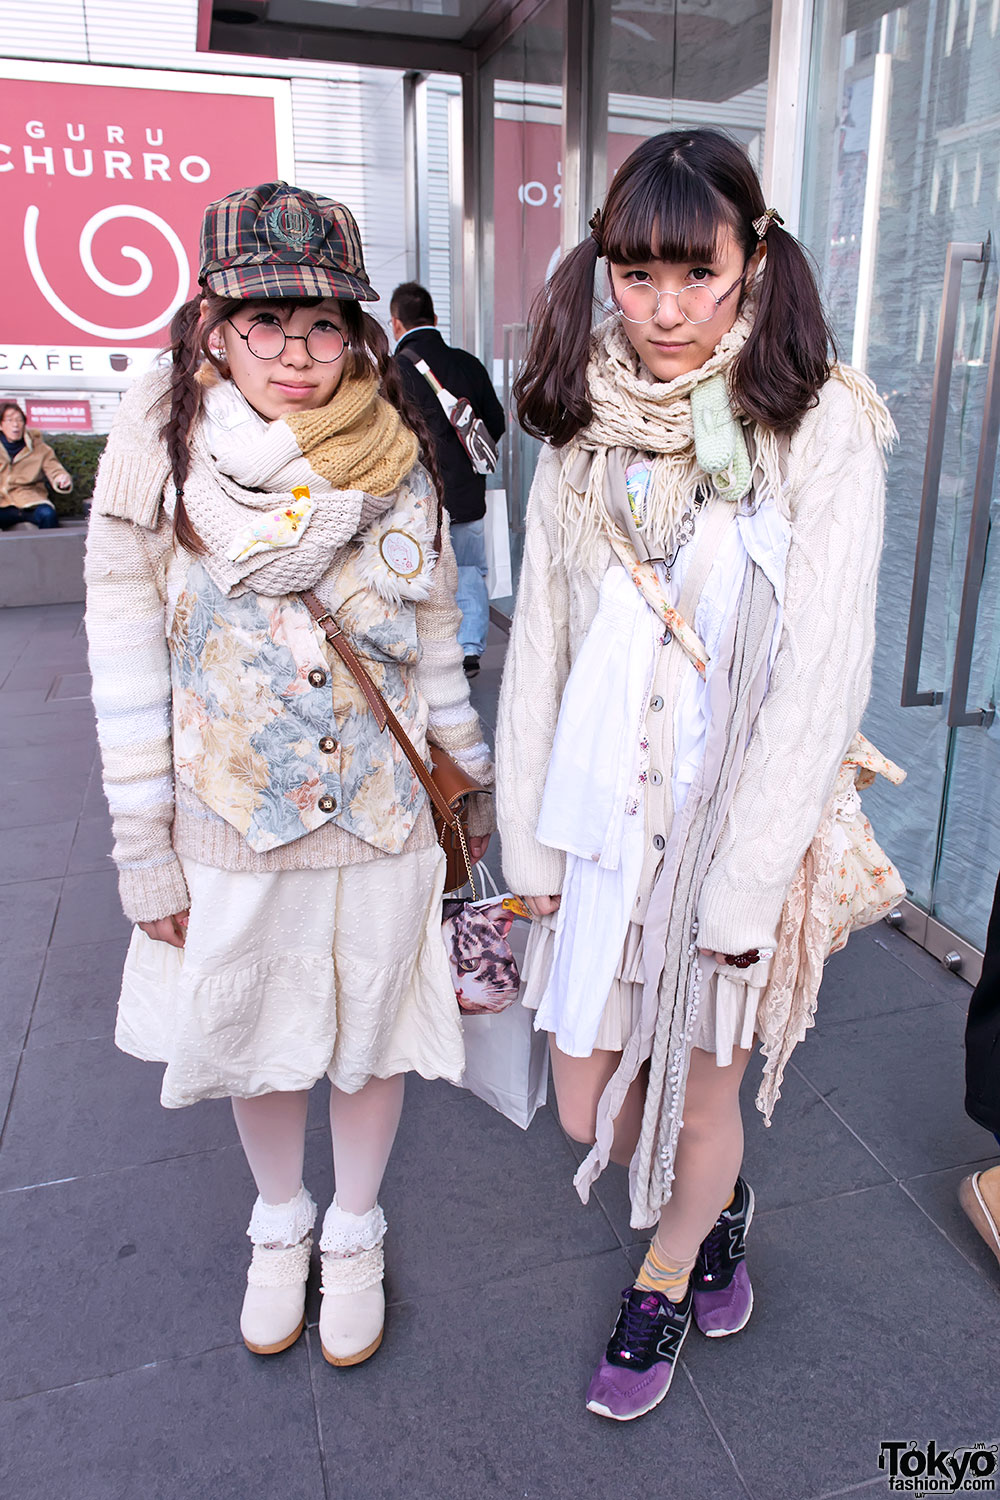 https://tokyofashion.com/wp-content/uploads/2013/01/Harajuku-Layered-Fashion-Mori-2013-01-02-DSC6719.jpg